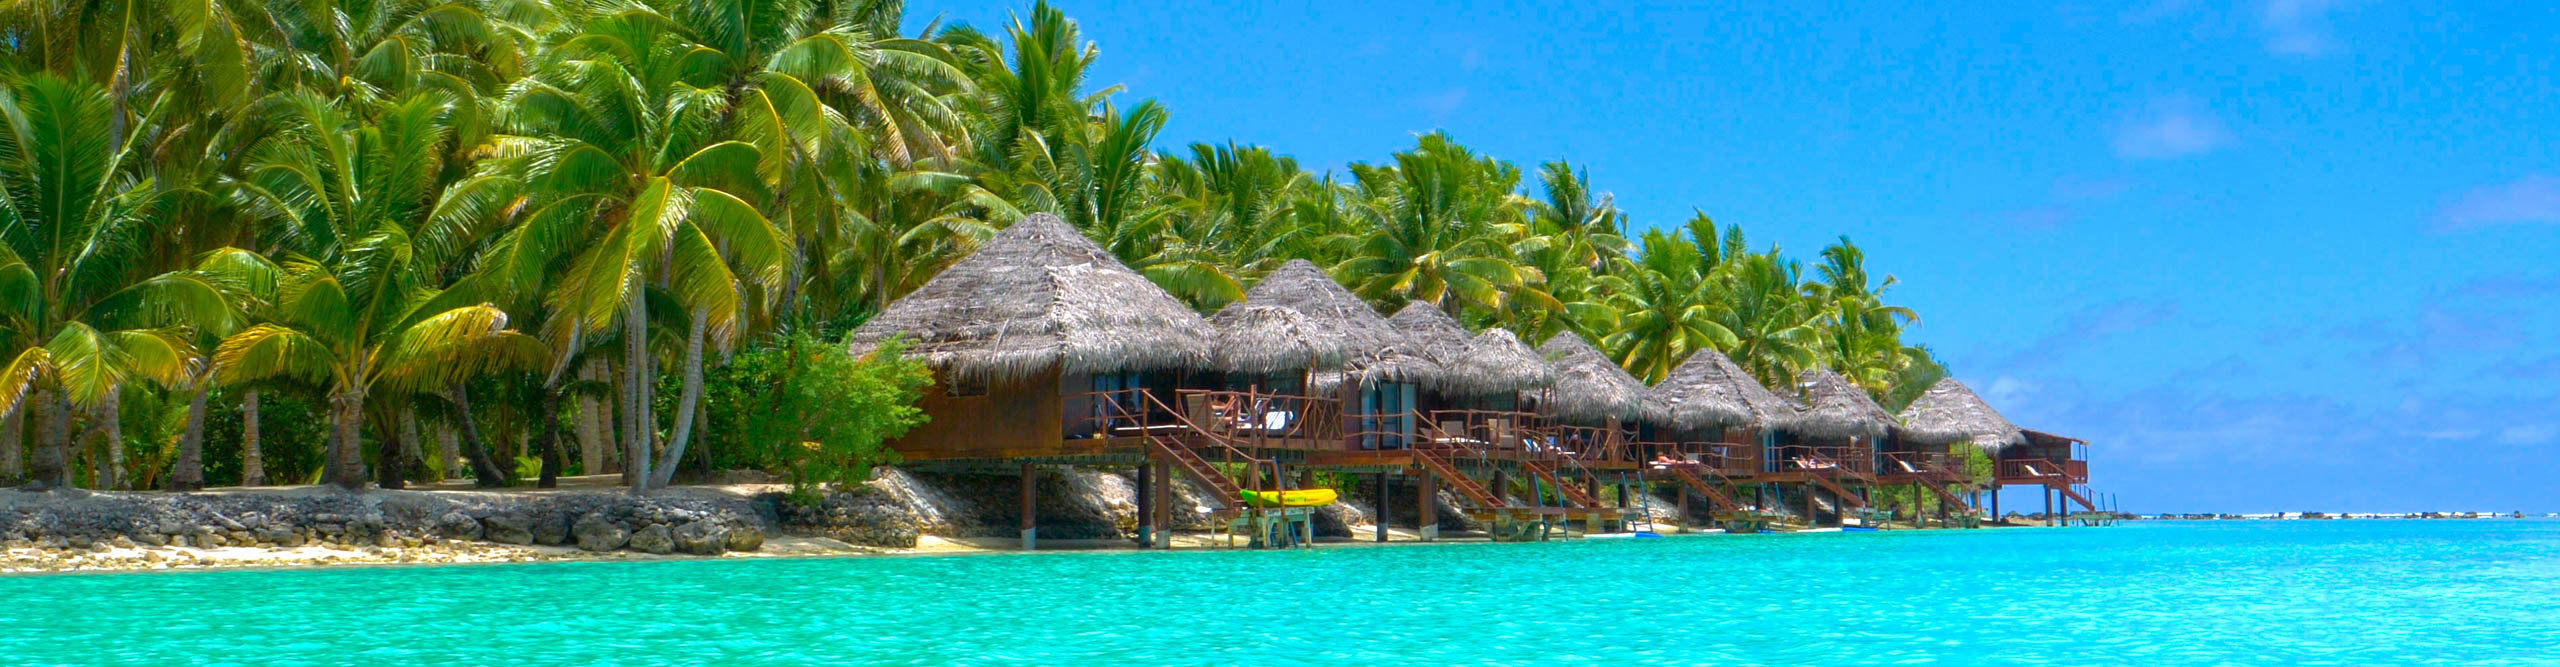 Beautiful luxury overwater villas face the stunning turquoise ocean in the idyllic Cook Islands